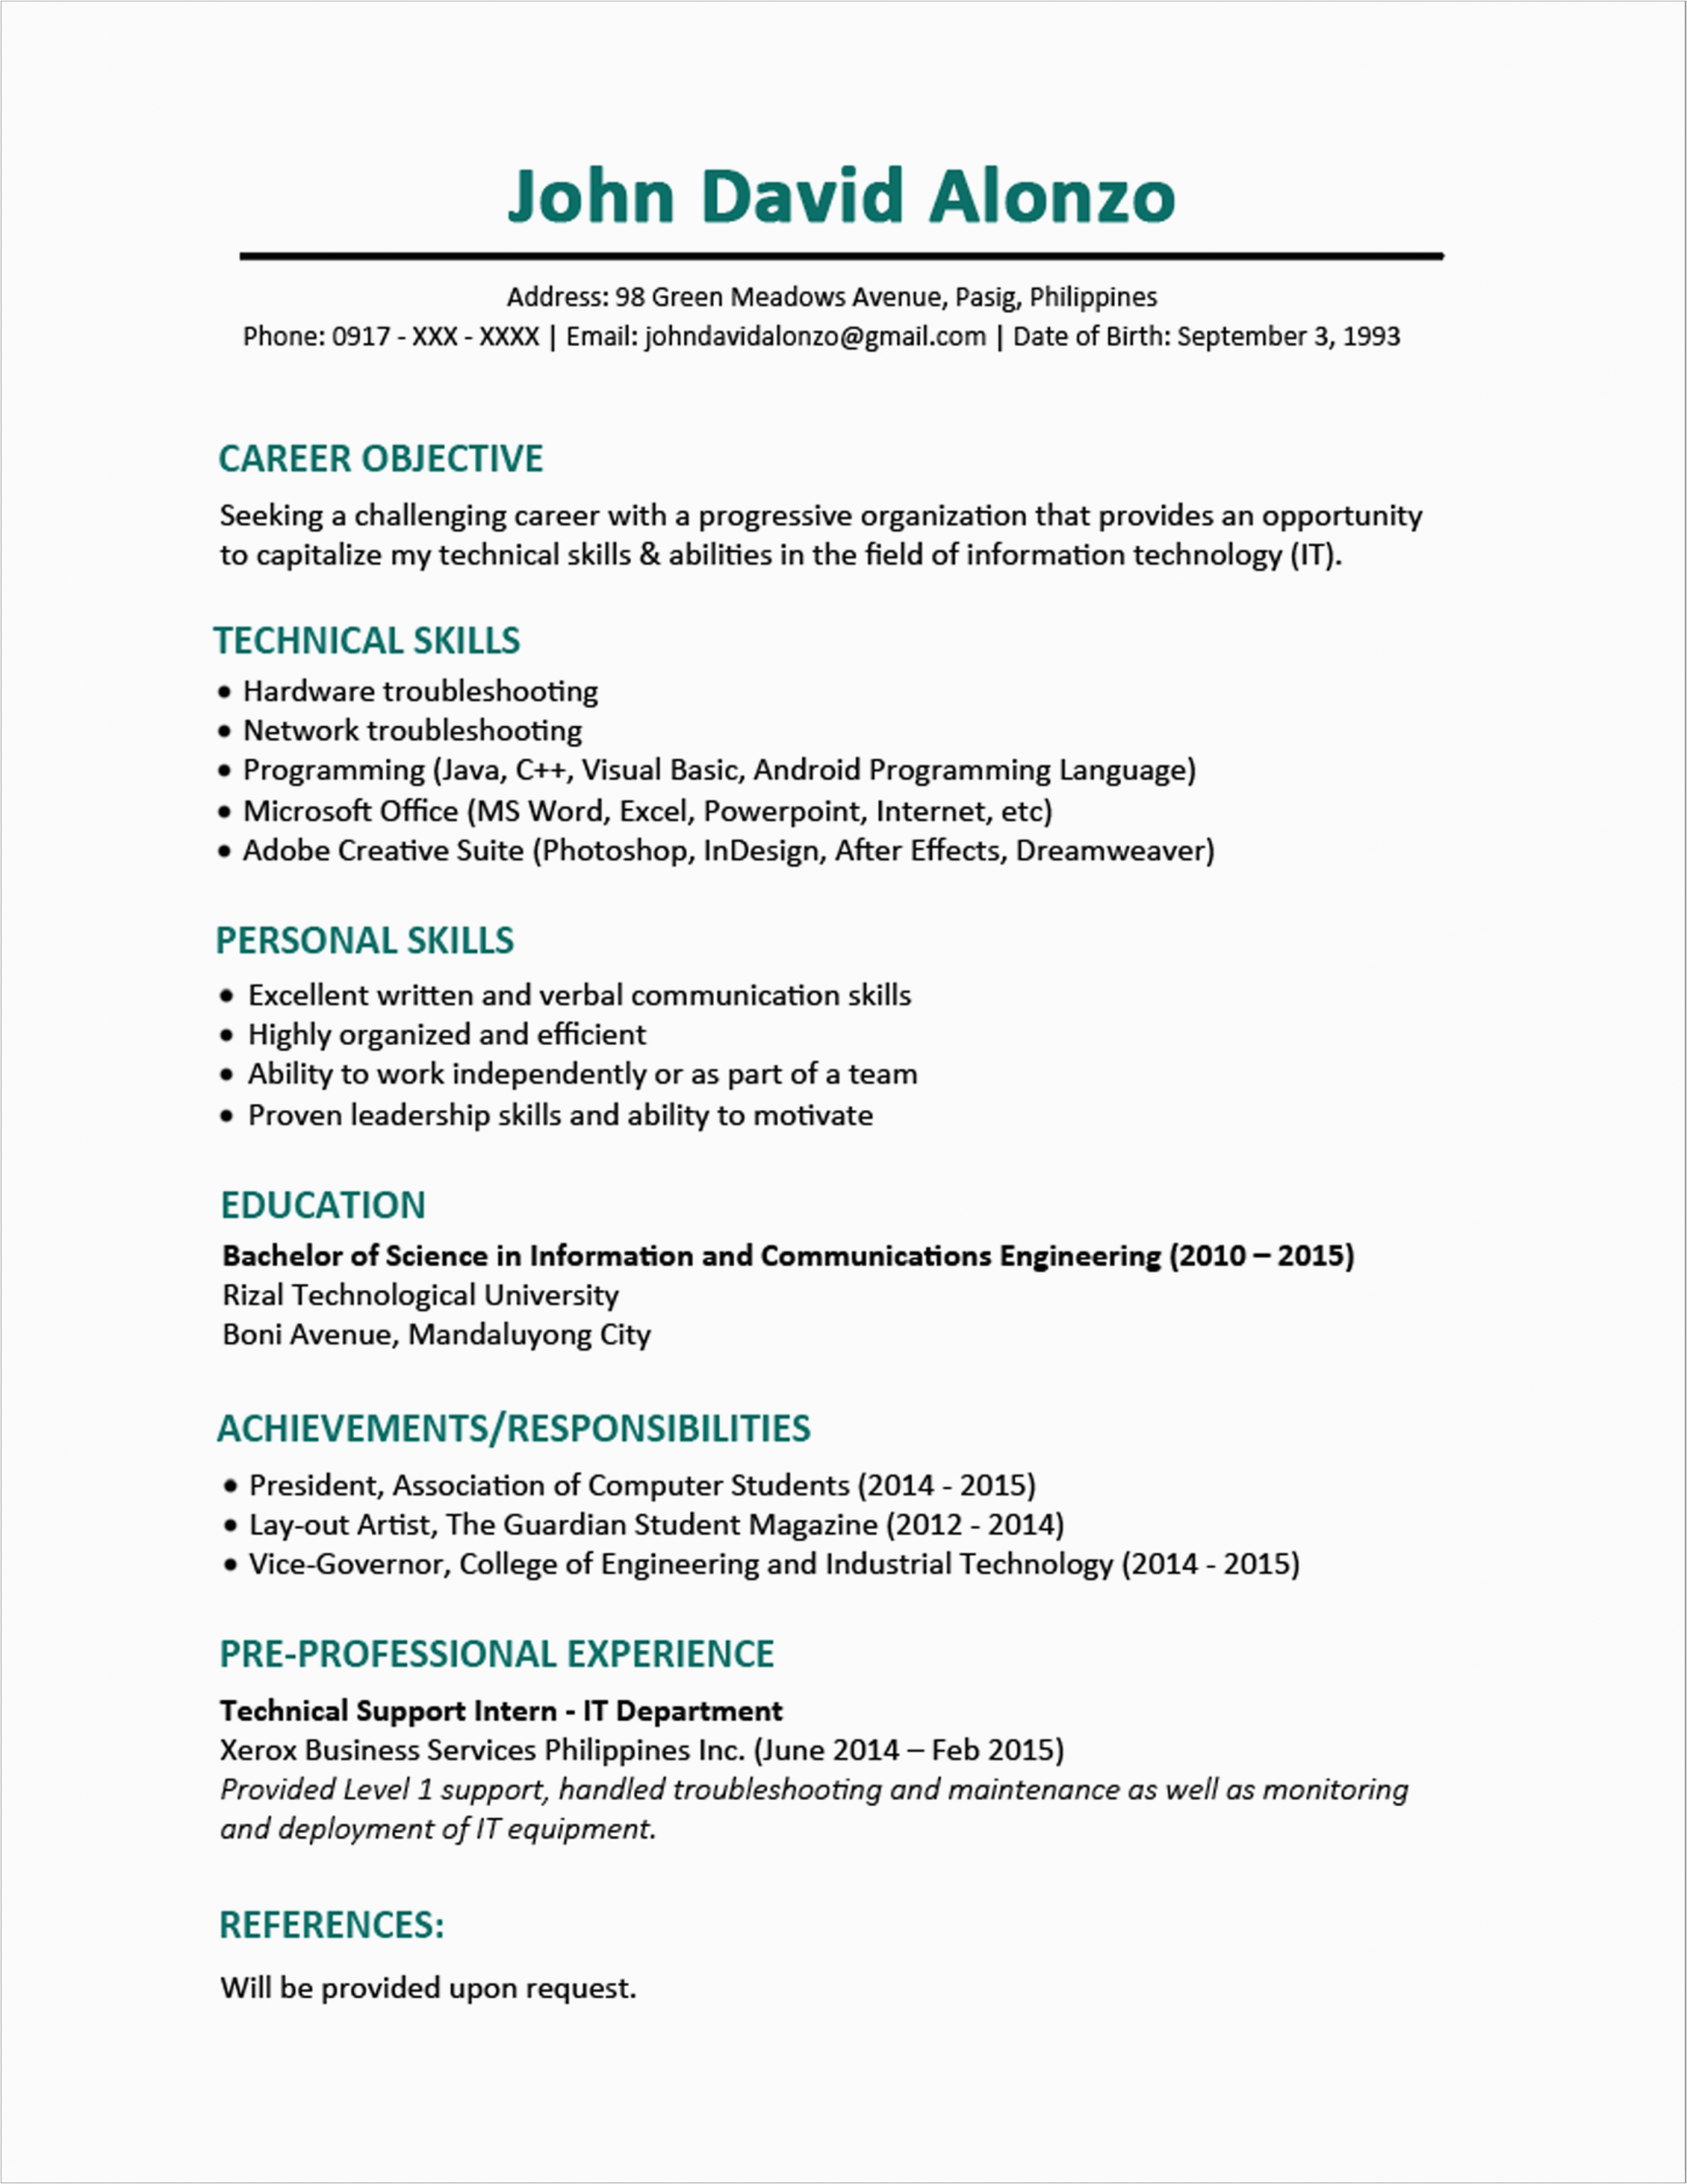 Sample Resume for Cpa Fresh Graduate Philippines Sample Resume format for Fresh Graduates E Page format